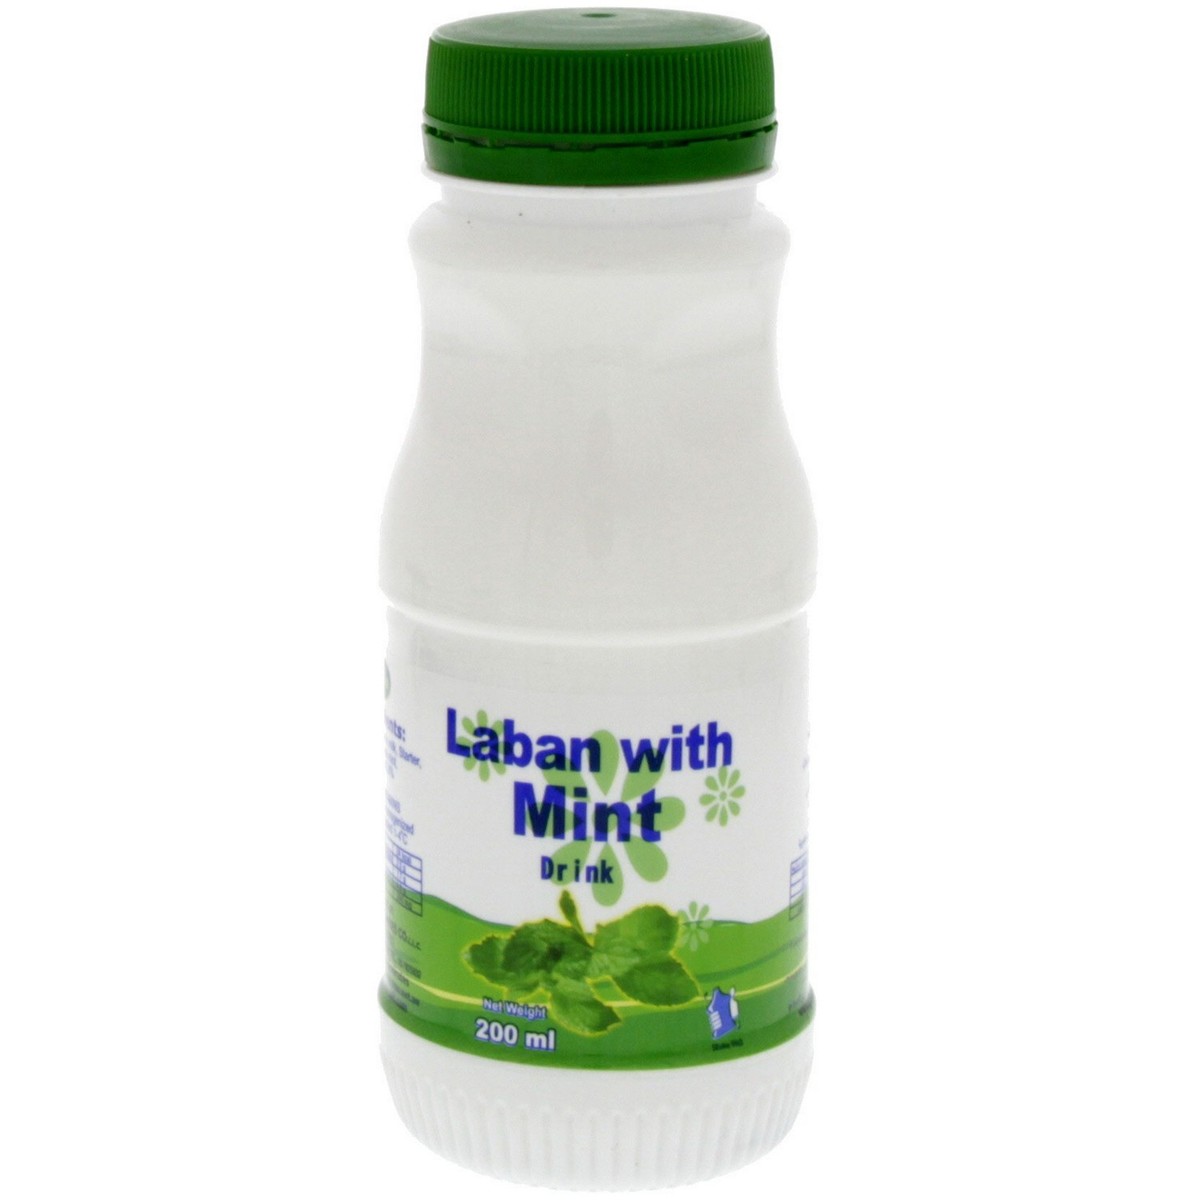 Safa Laban With Mint Drink 200 ml